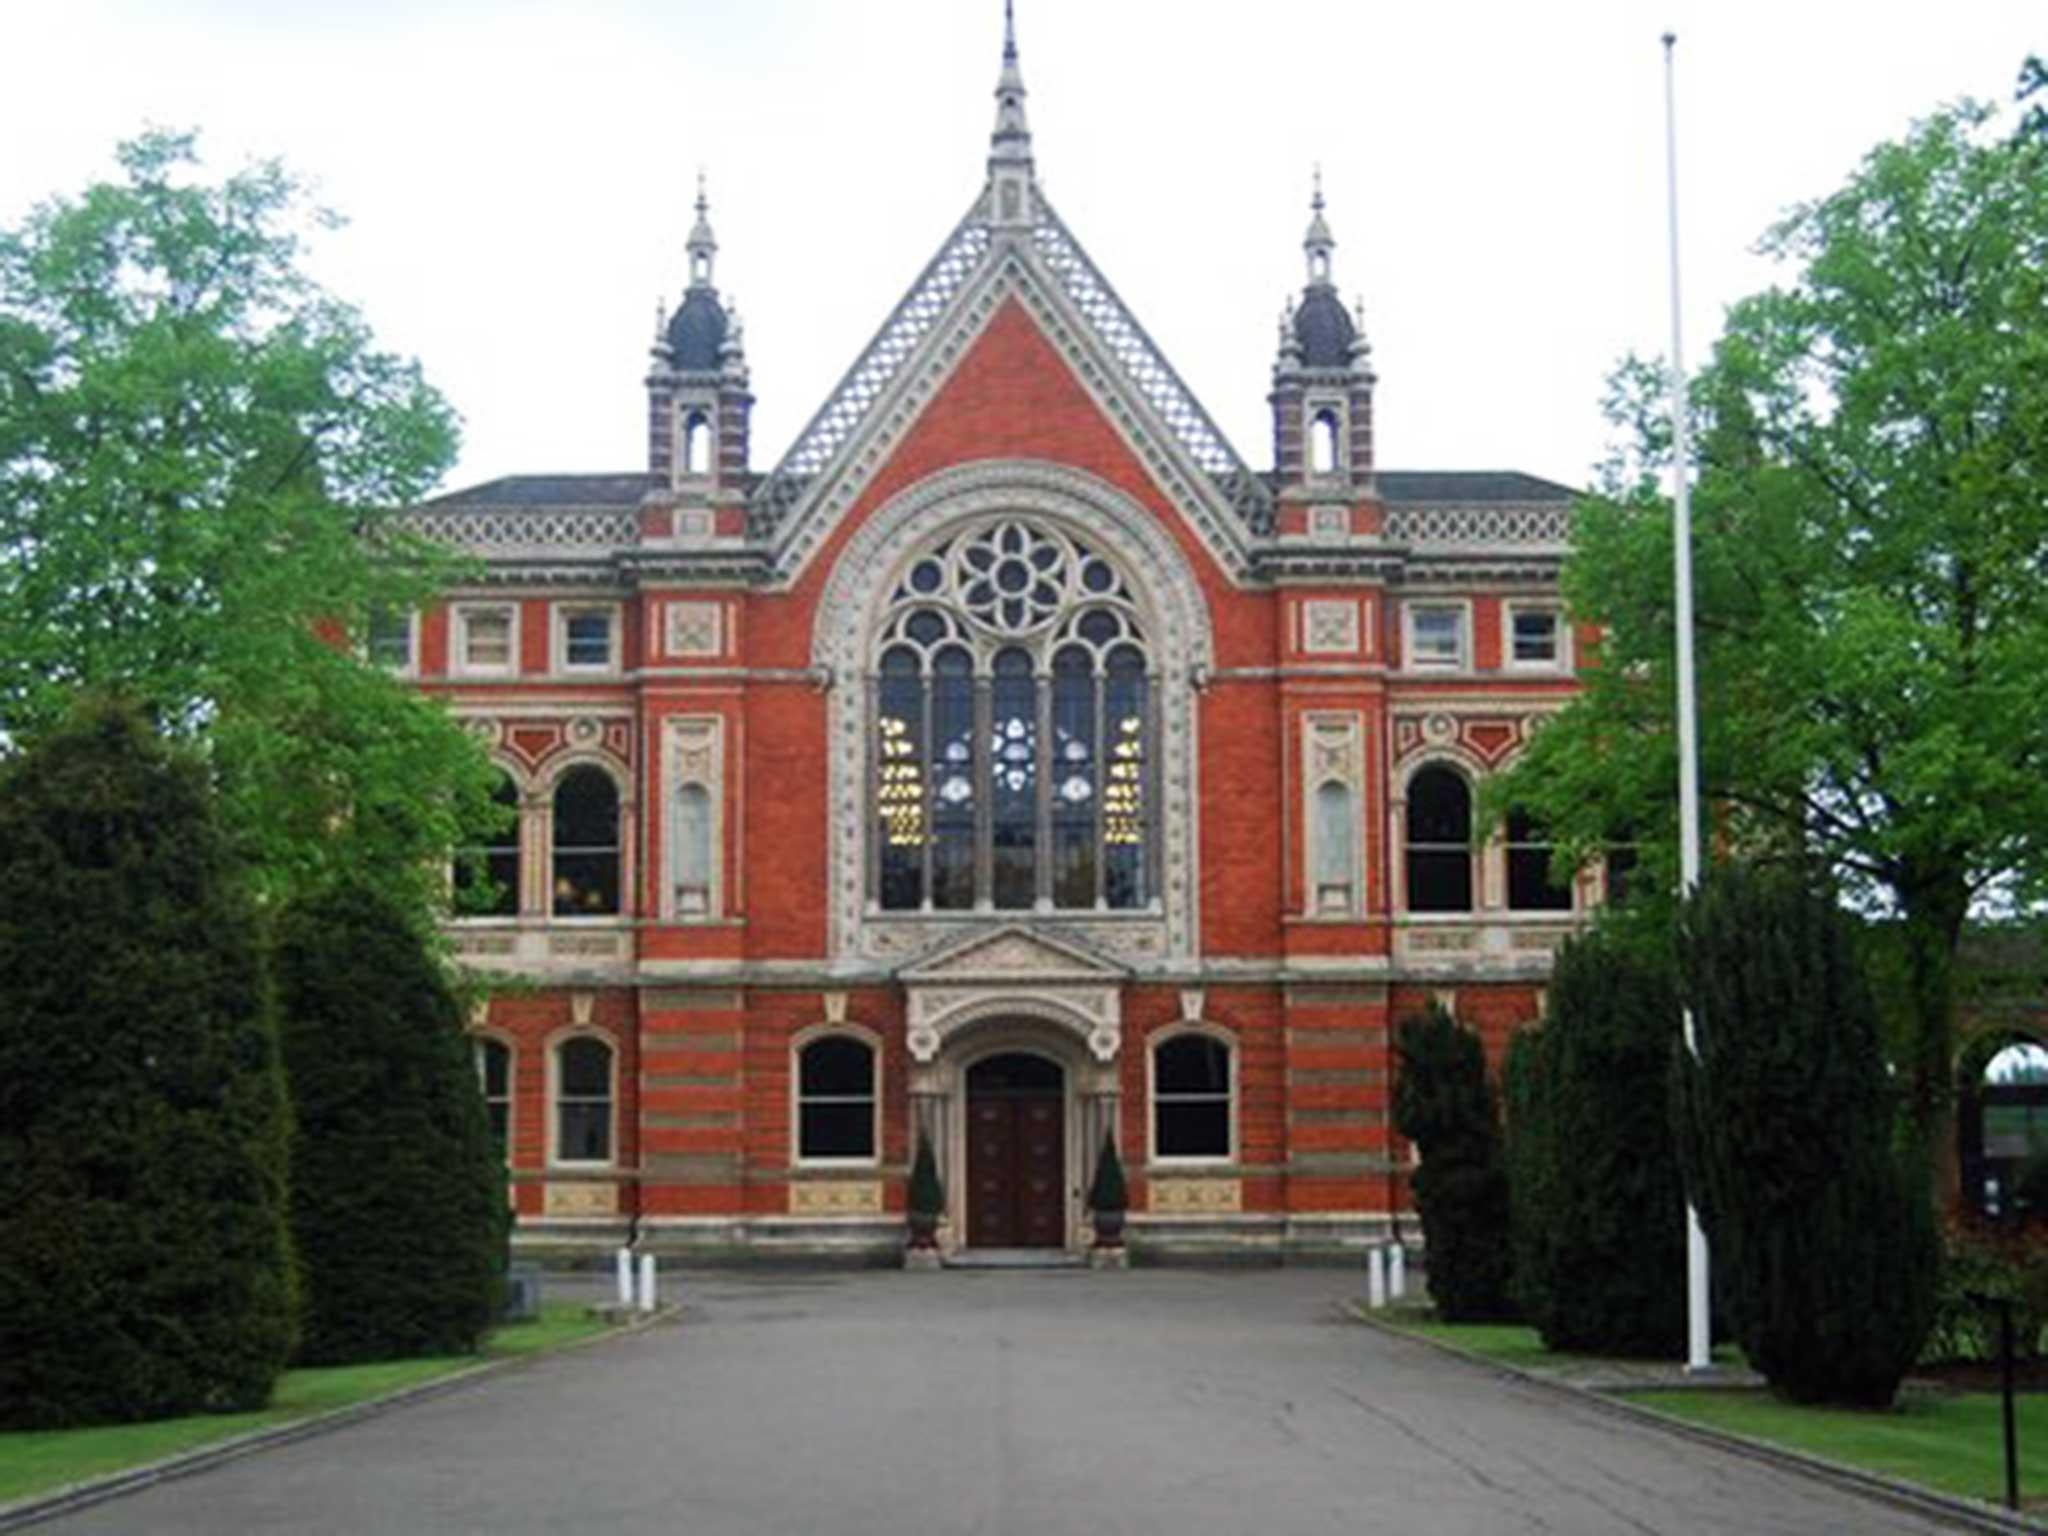 Dulwich College, near Brixton, south London